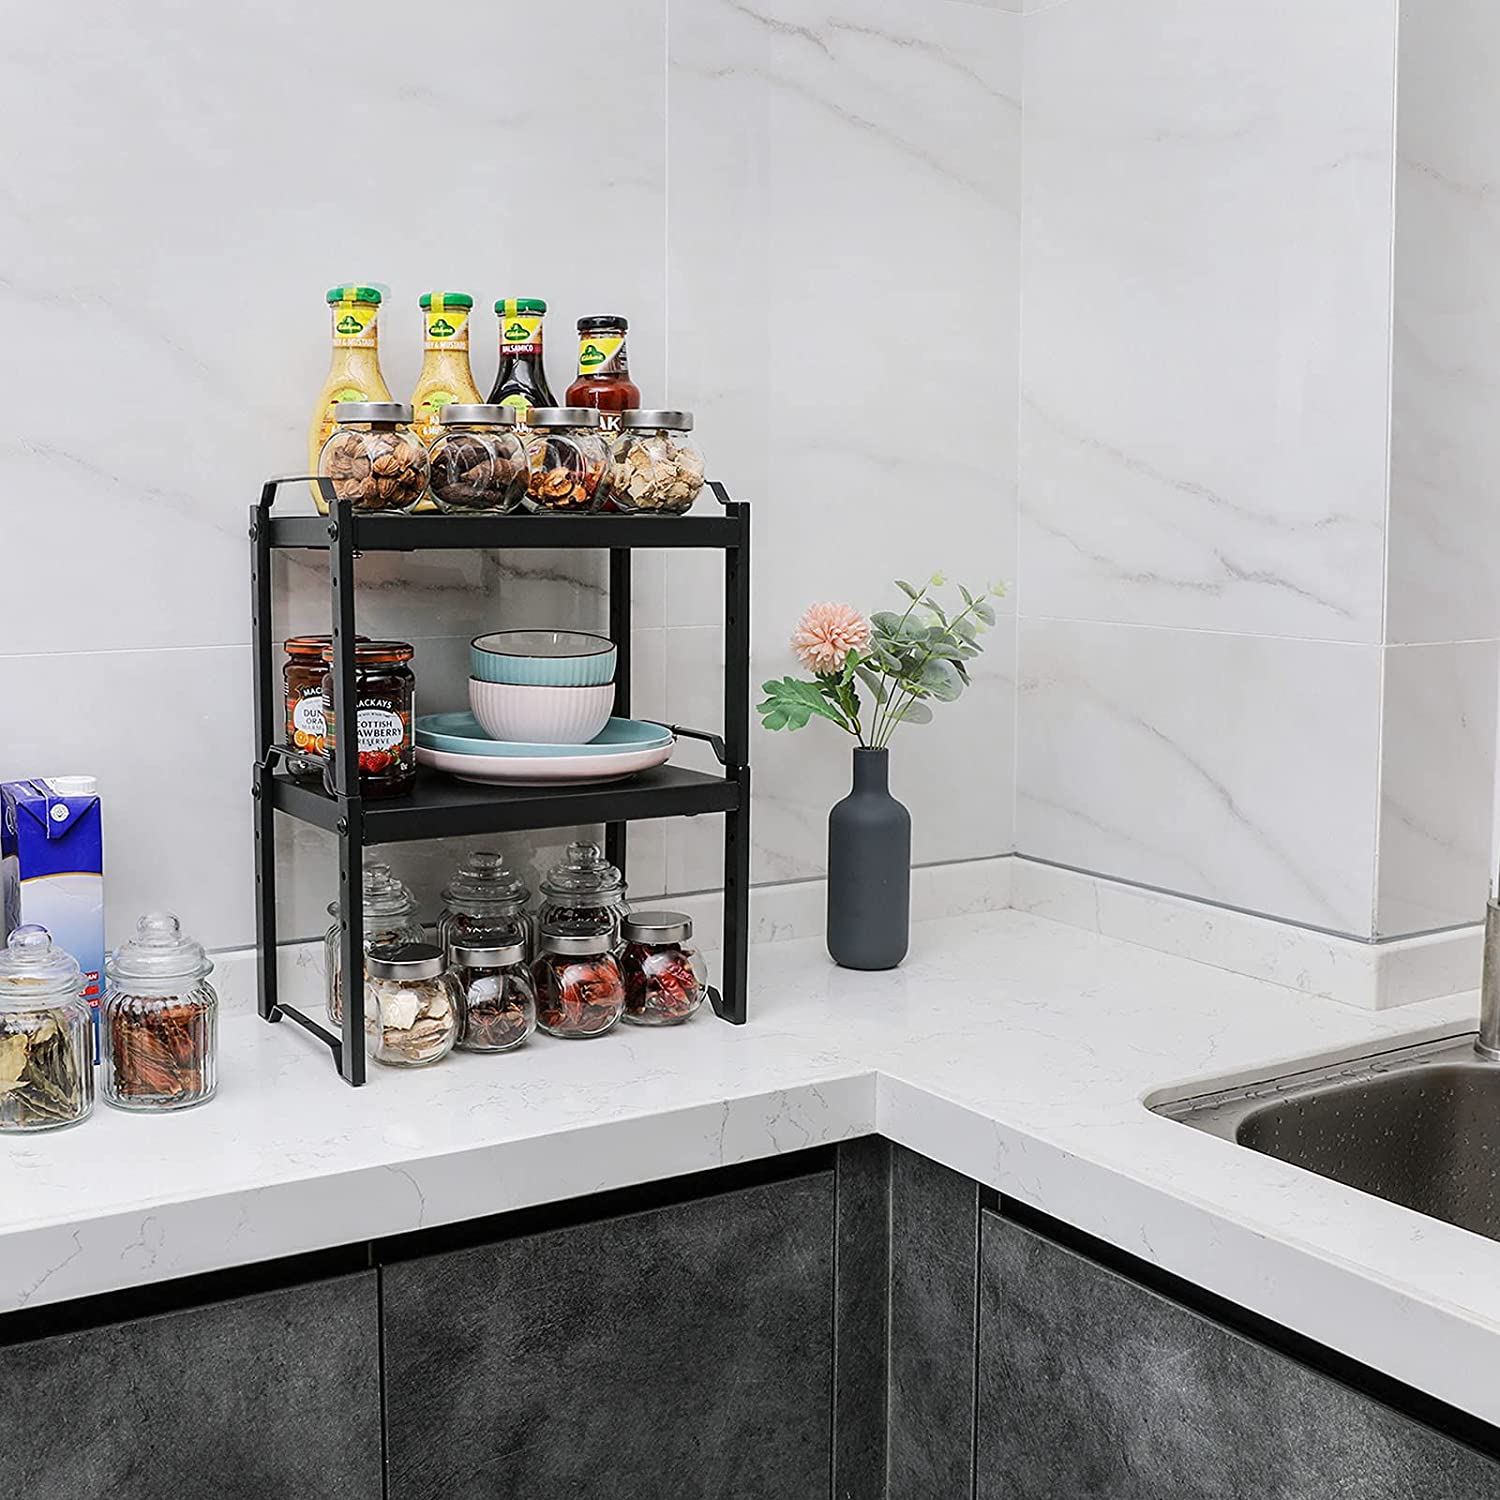 X-cosrack Expandable Shelf for Kitchen Cabinet, Adjustable Cabinet